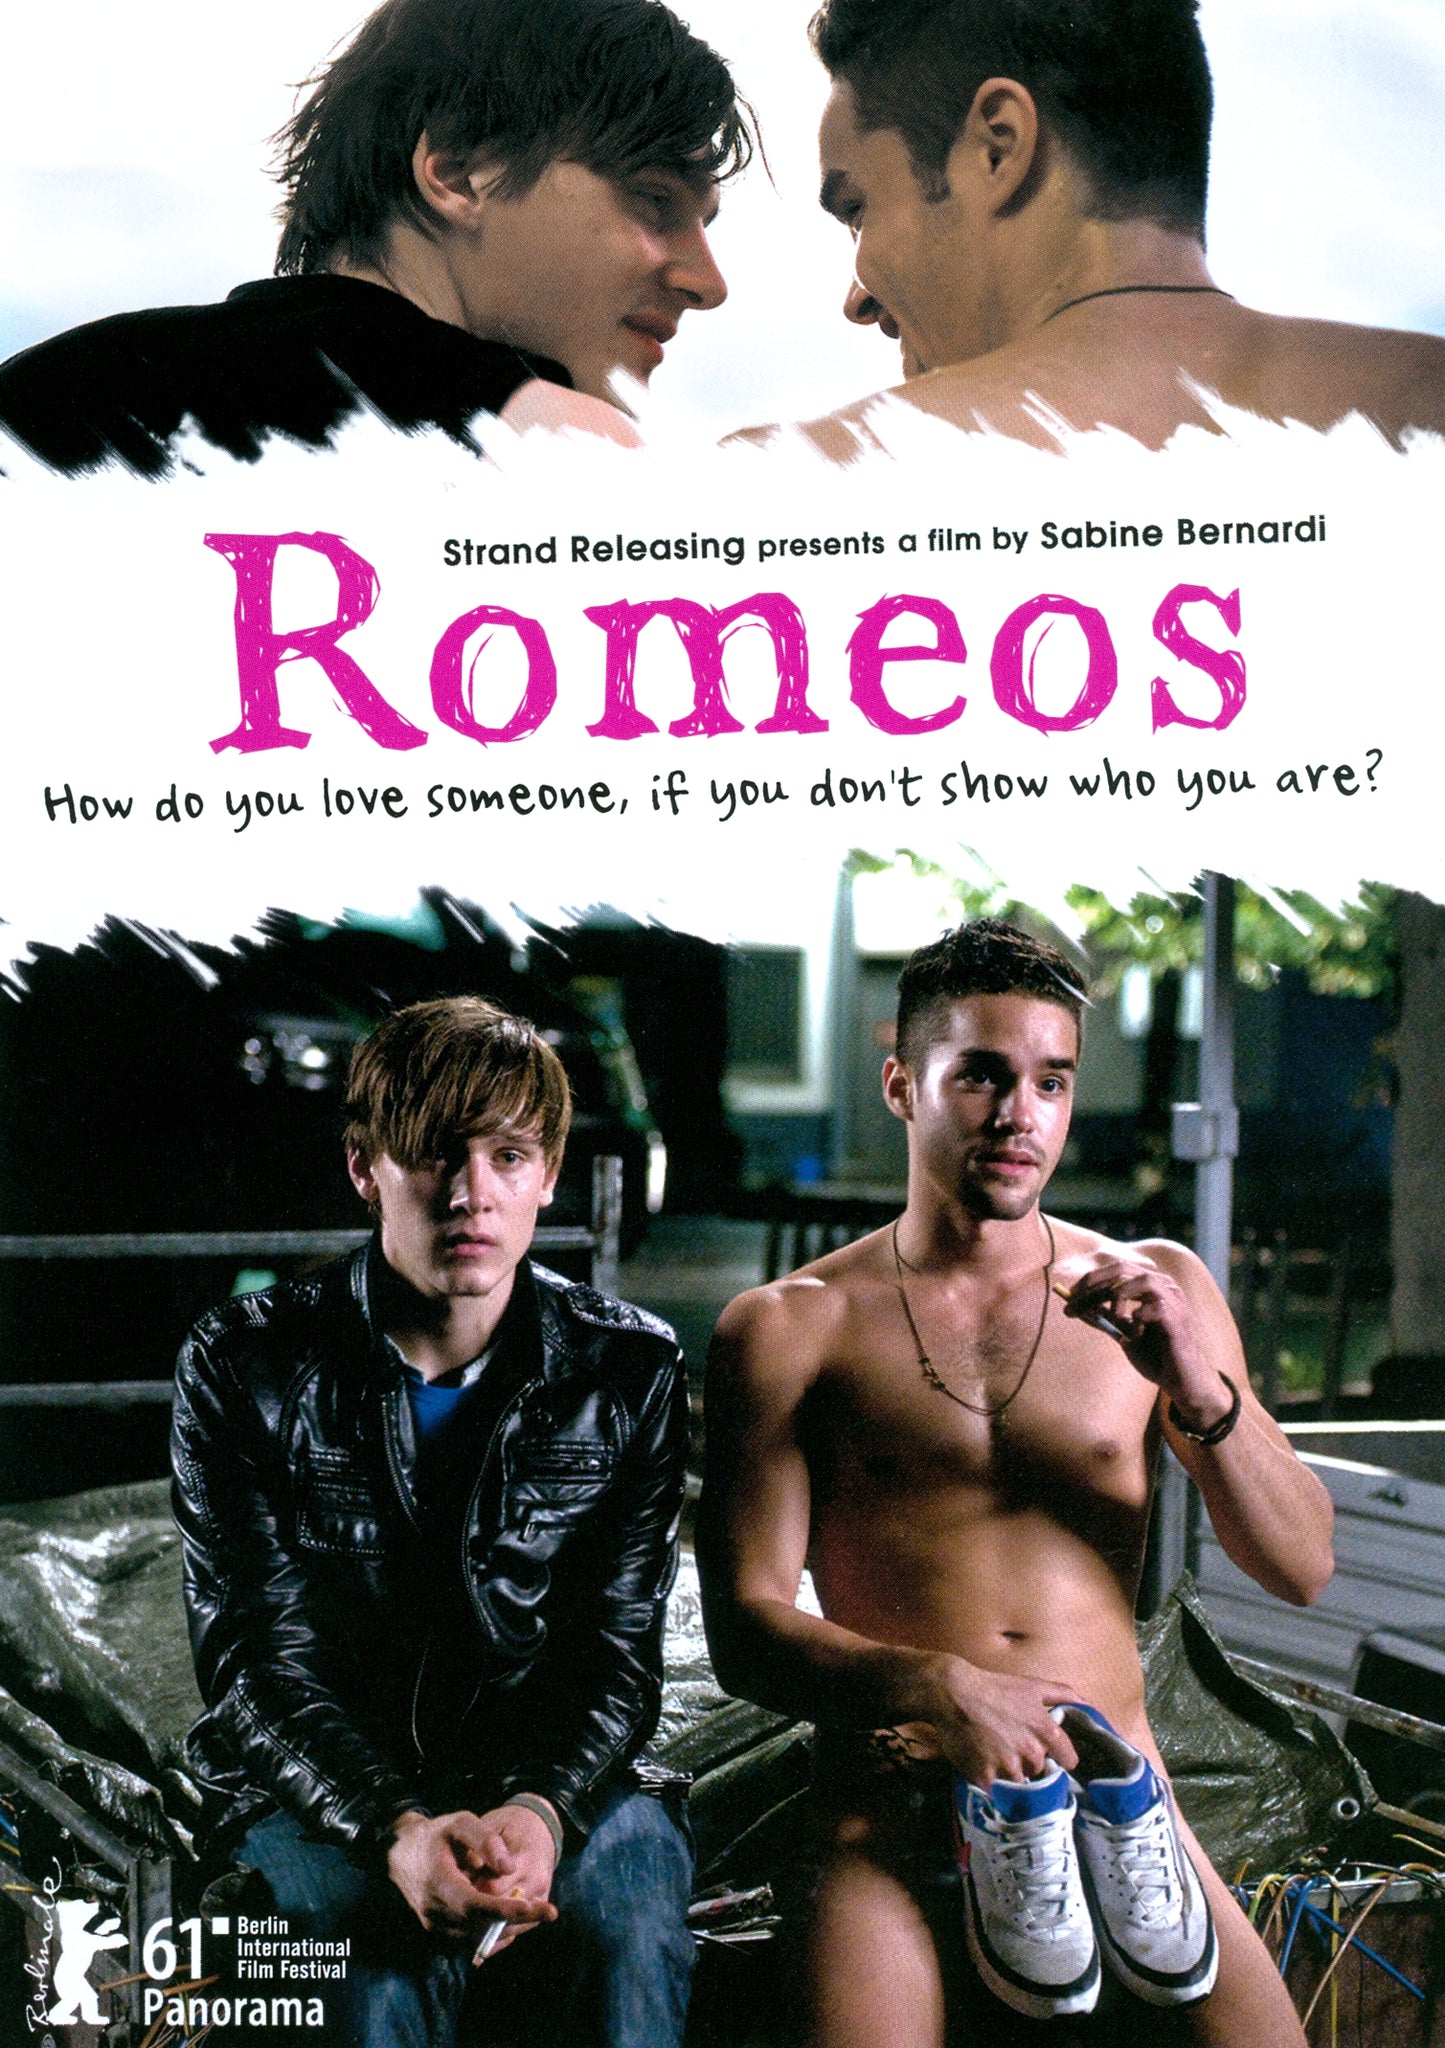 Romeos cover art